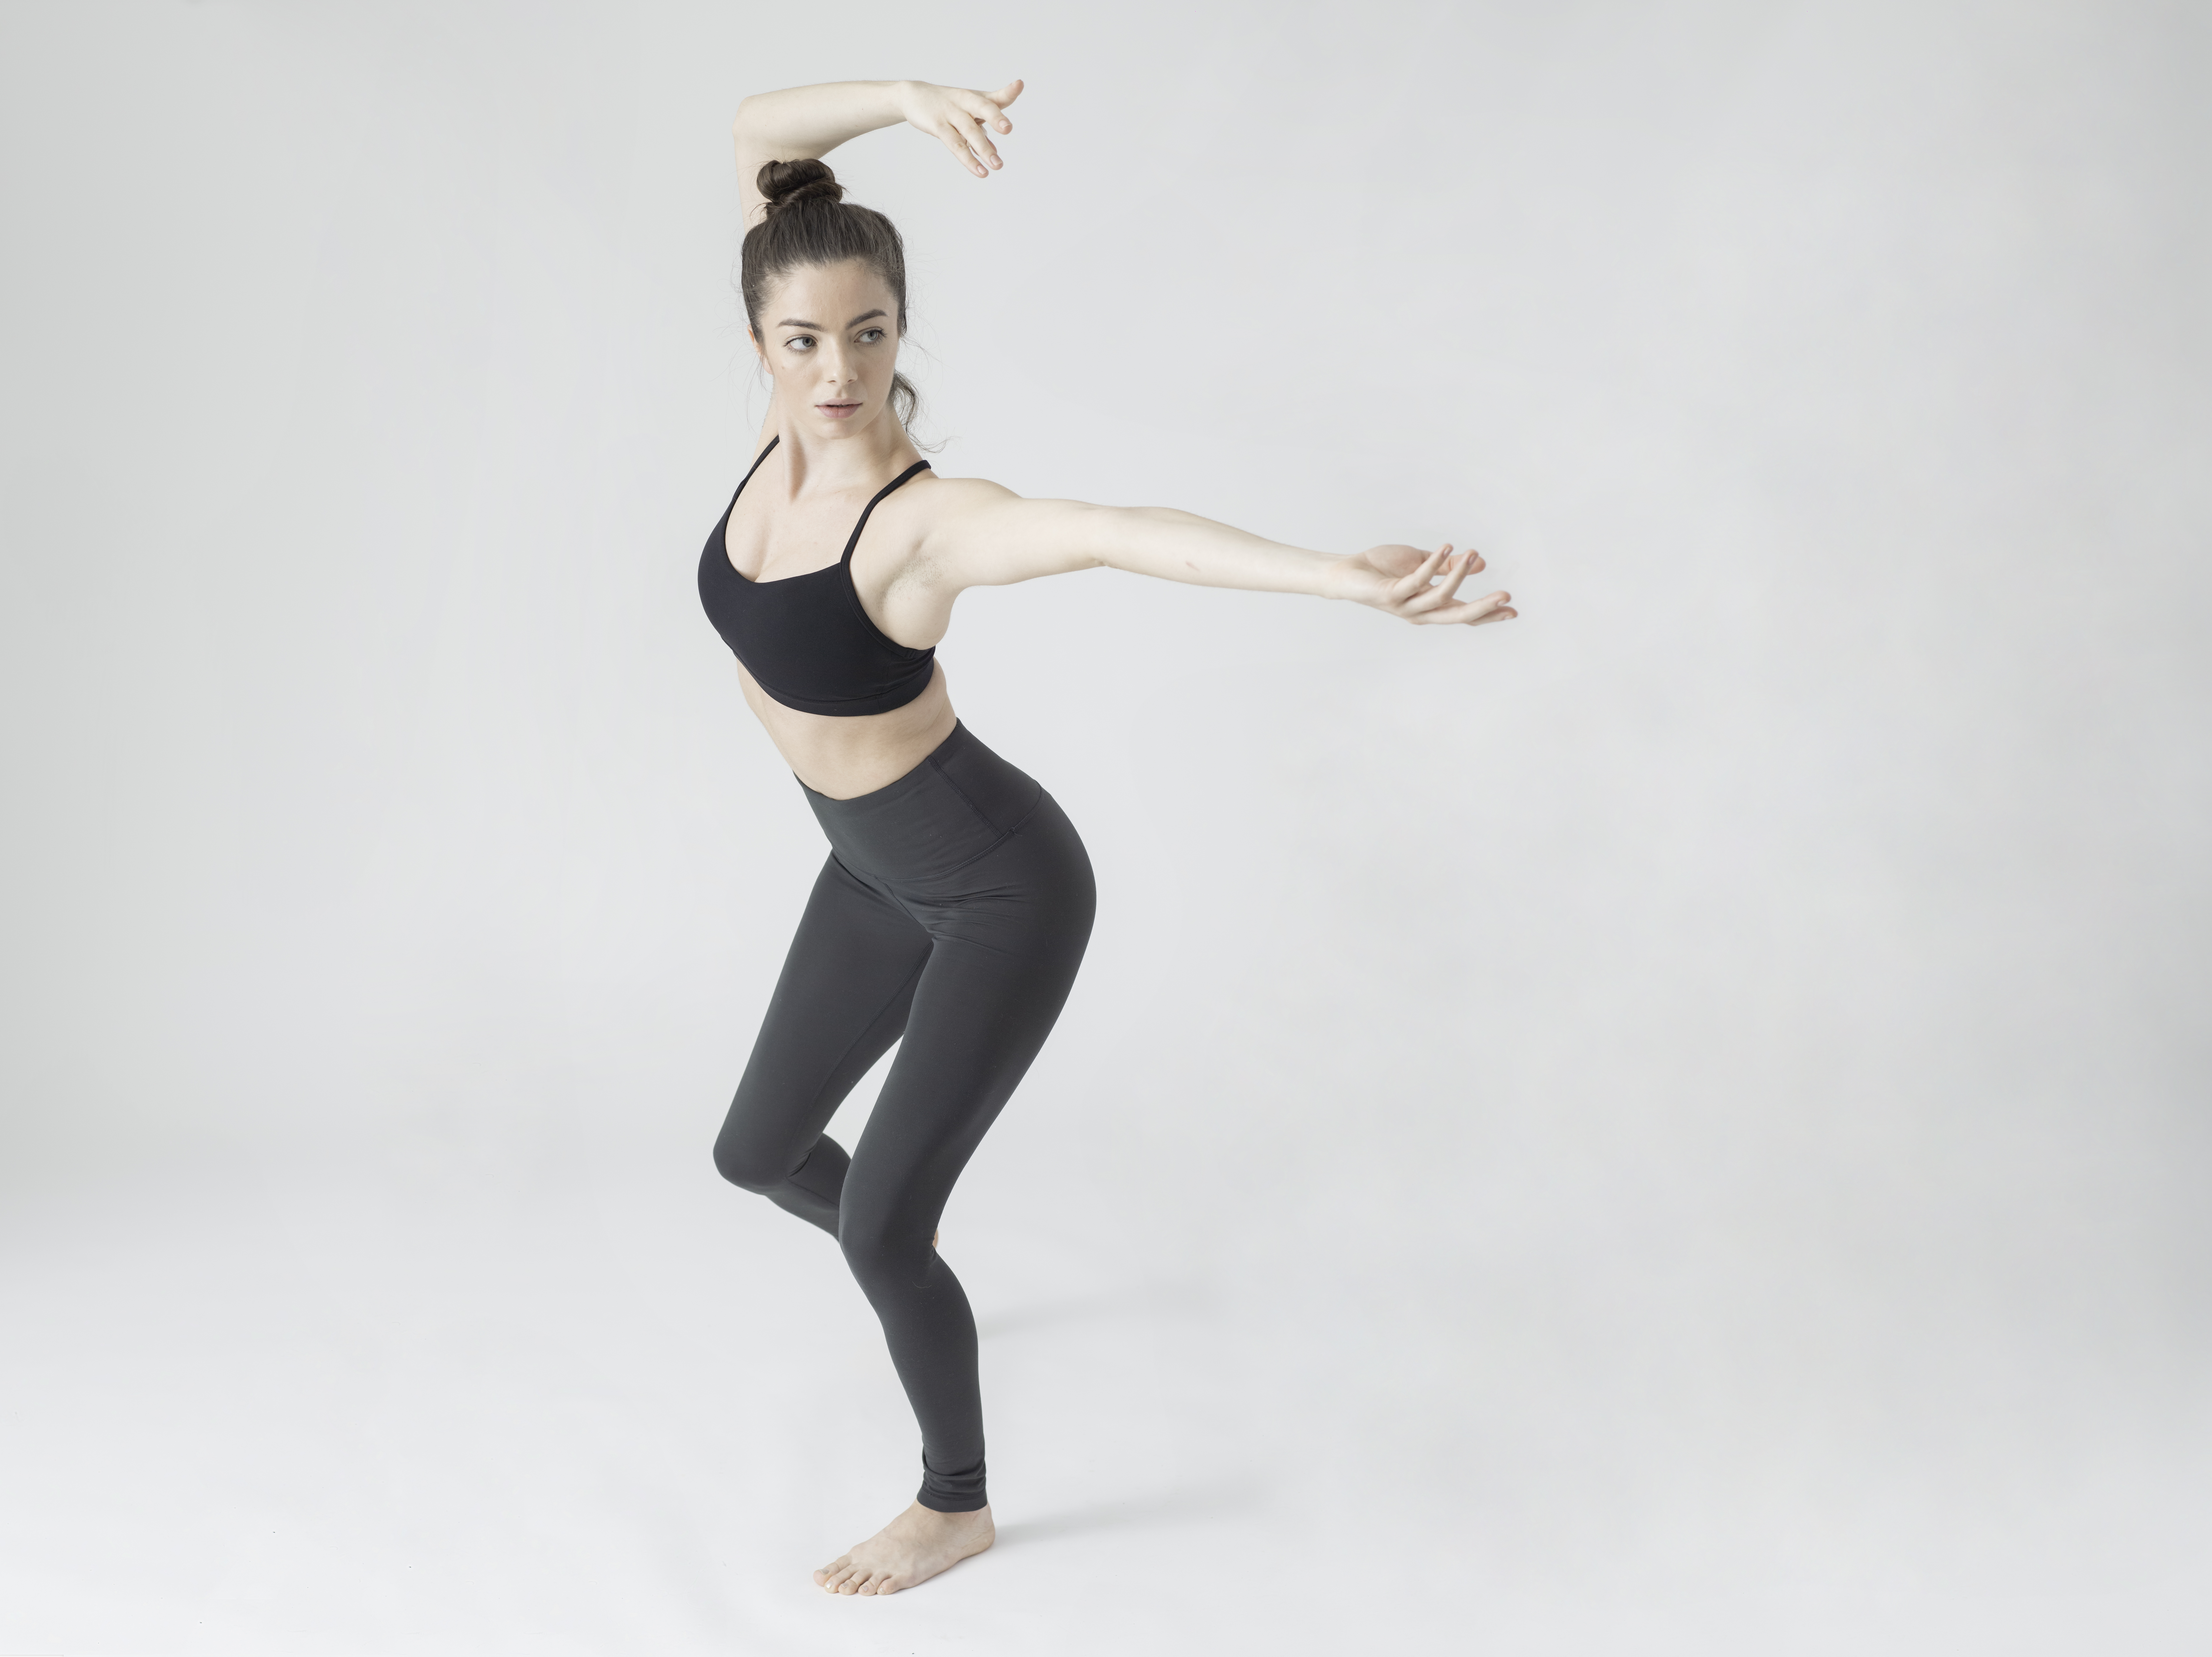 Tips on dynamic pose by Cyfuko - Make better art | CLIP STUDIO TIPS